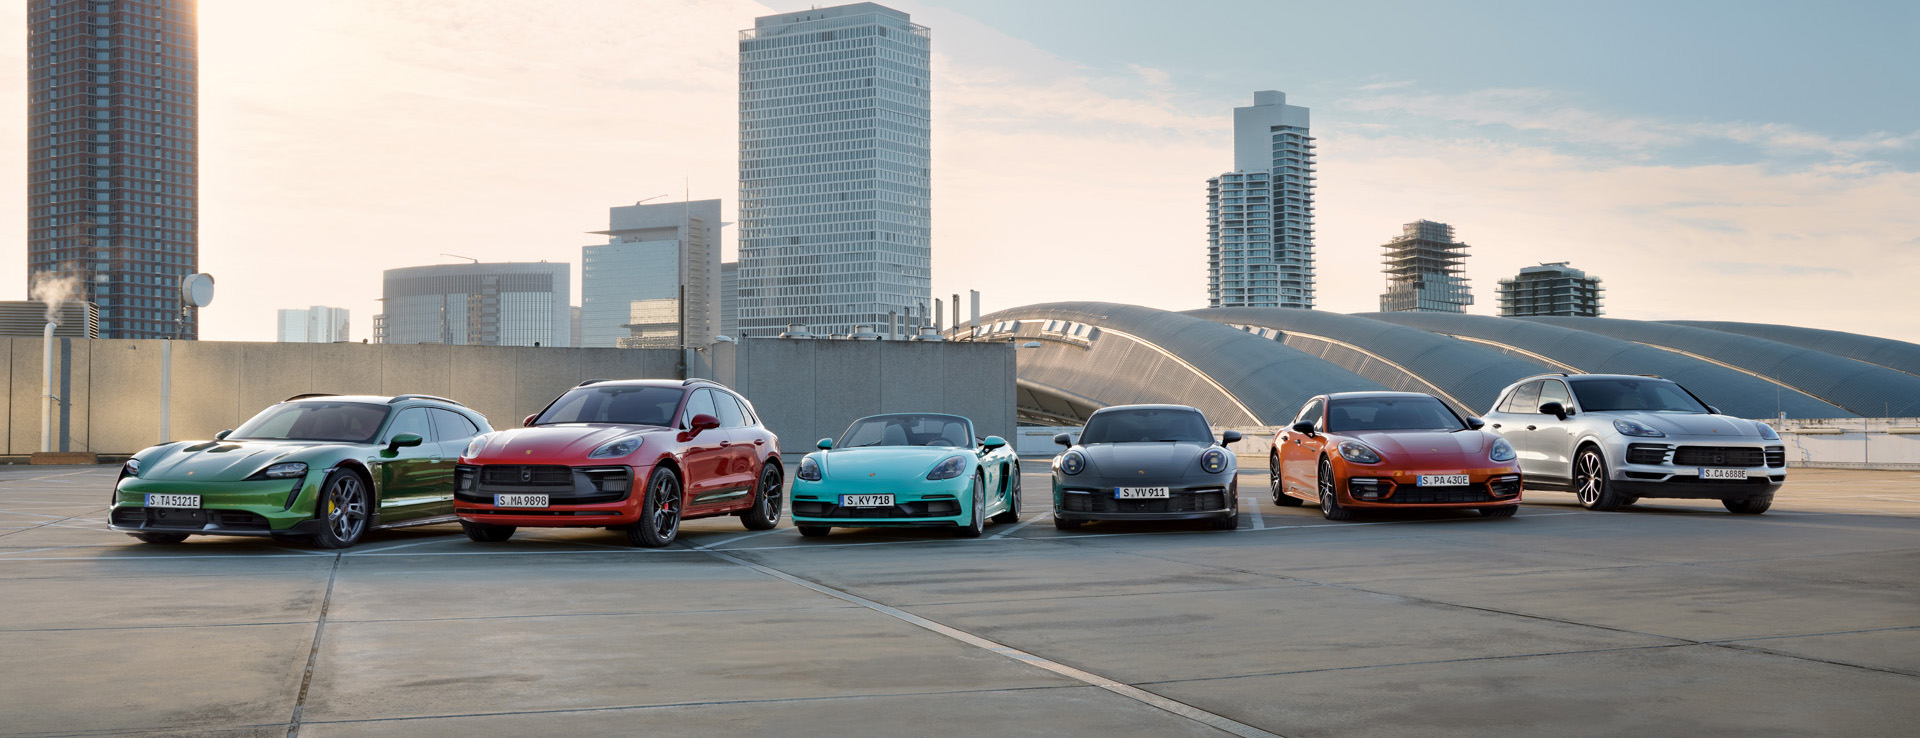 Six Porsche models in front of skyscraper skyline by day